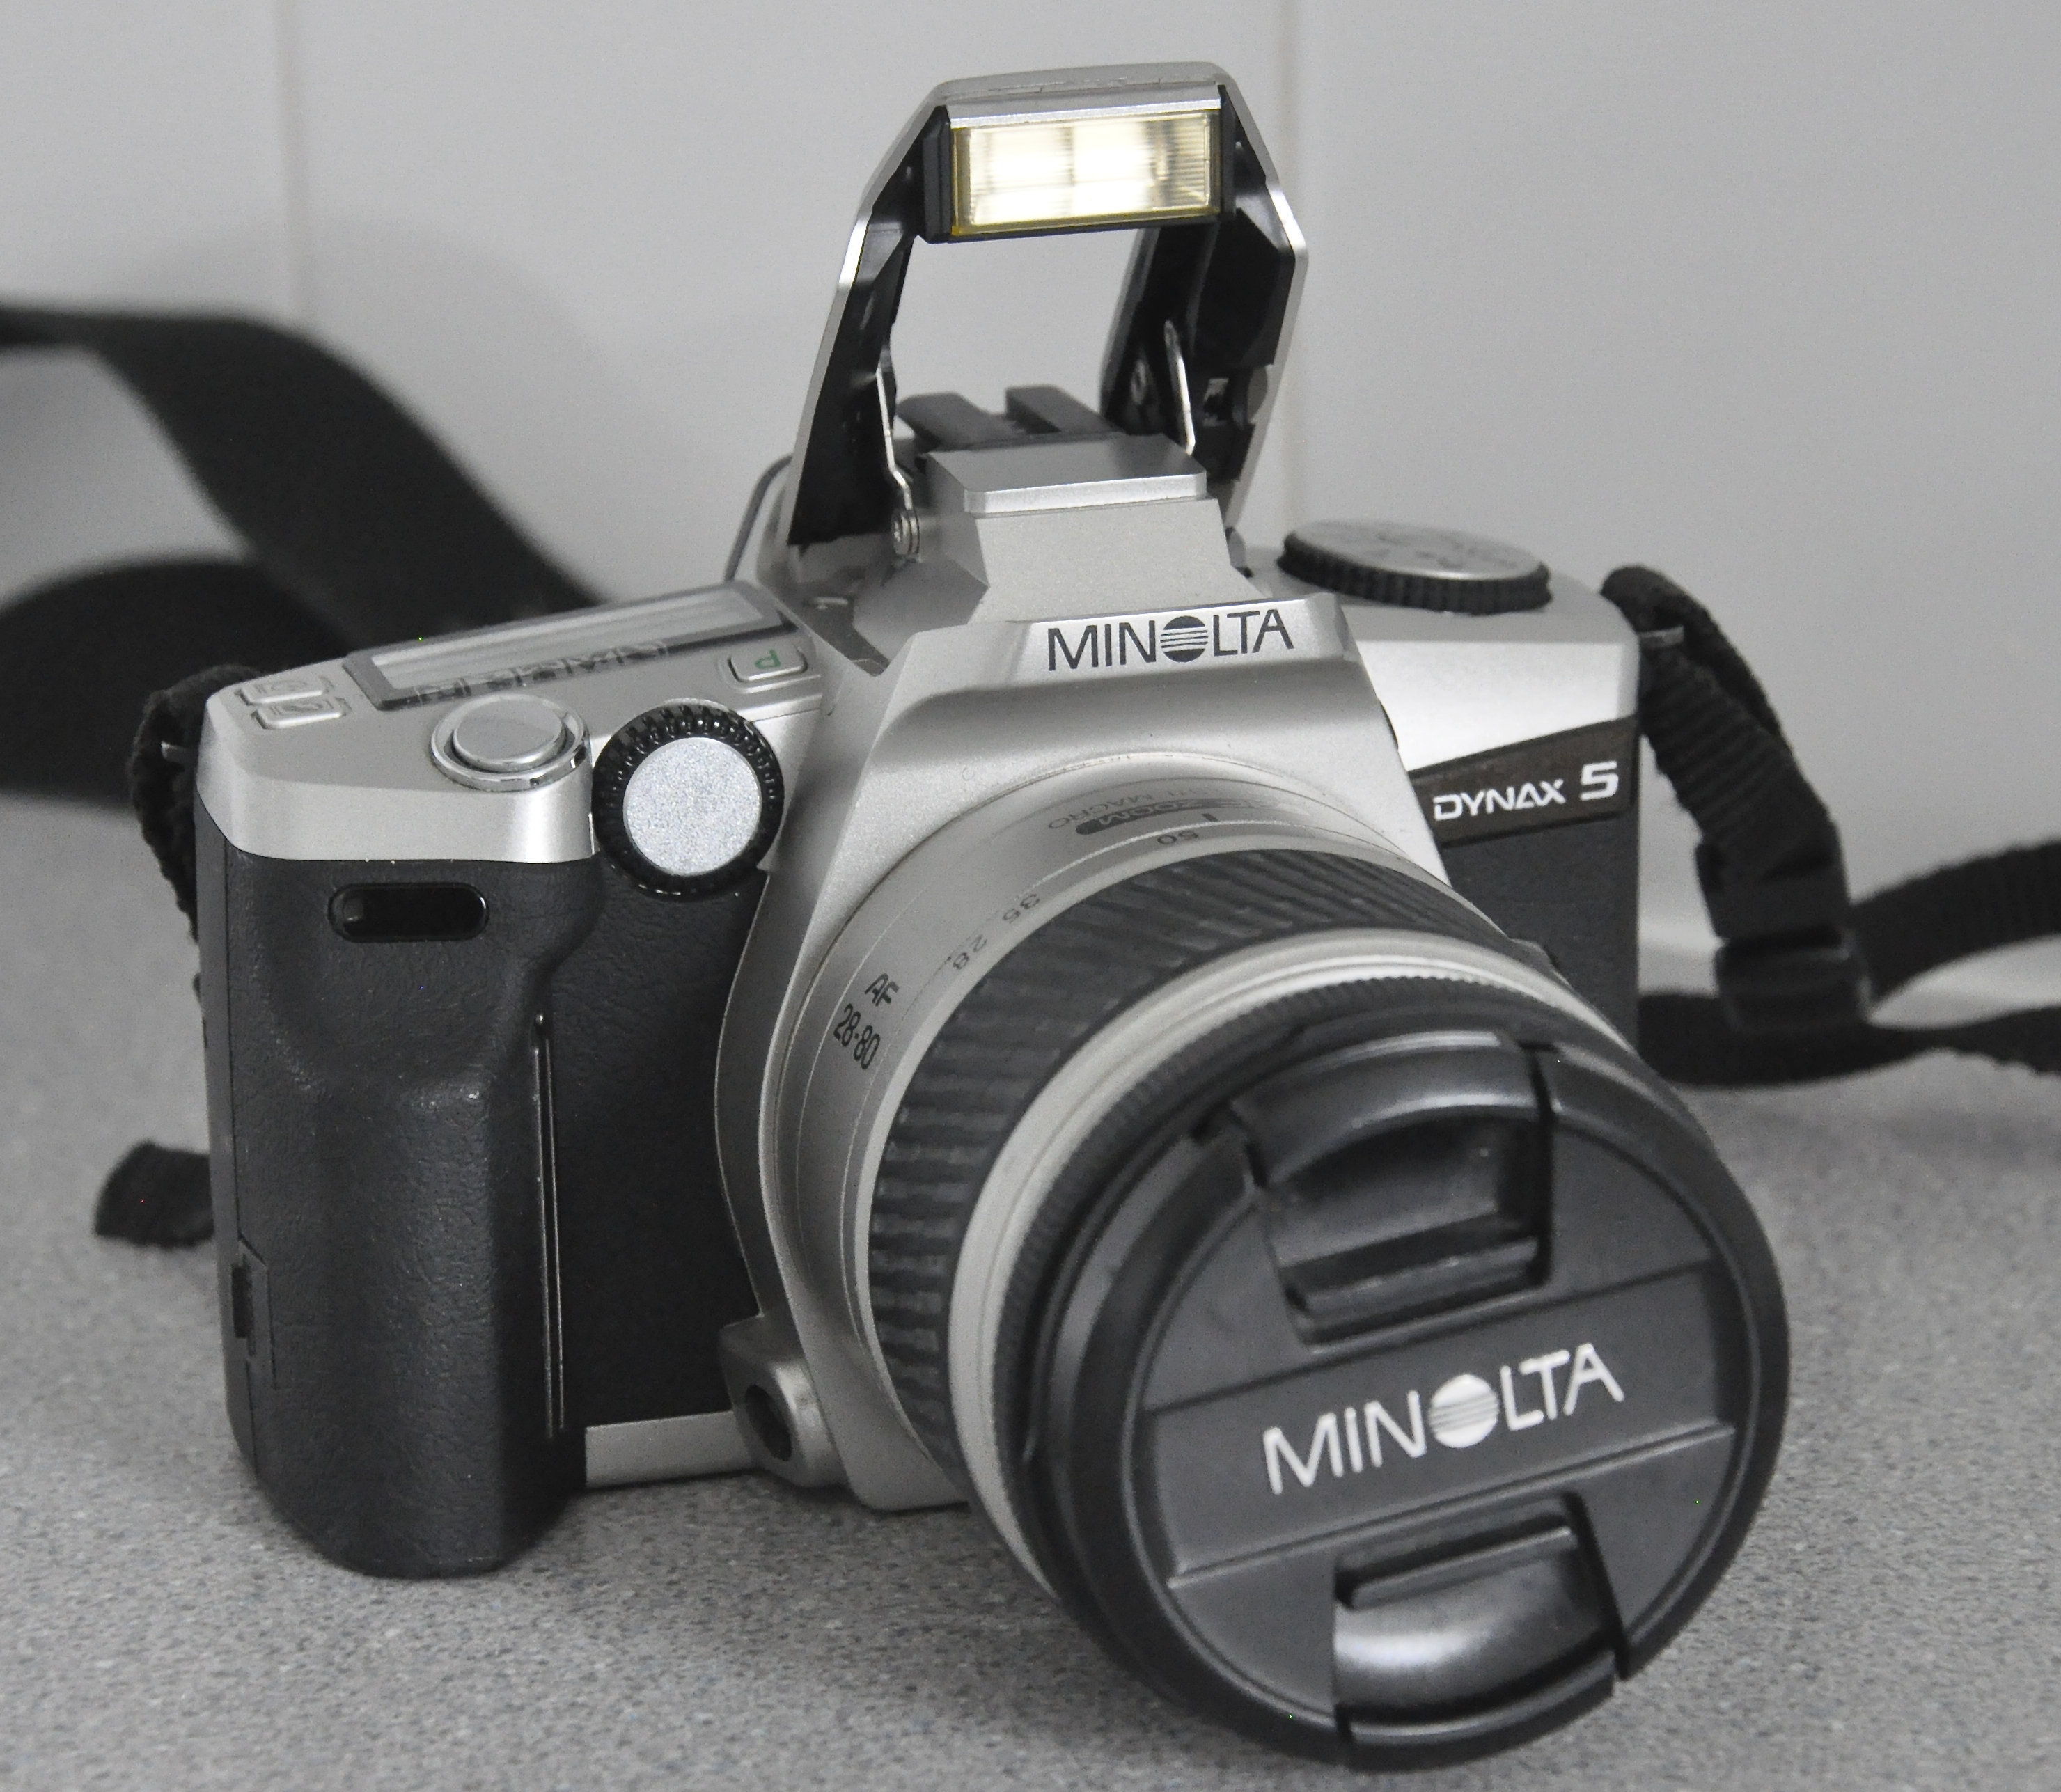 File:Minolta Dynax 5, 28-80 Minolta Lens, Analogue Film Camera.jpg ...